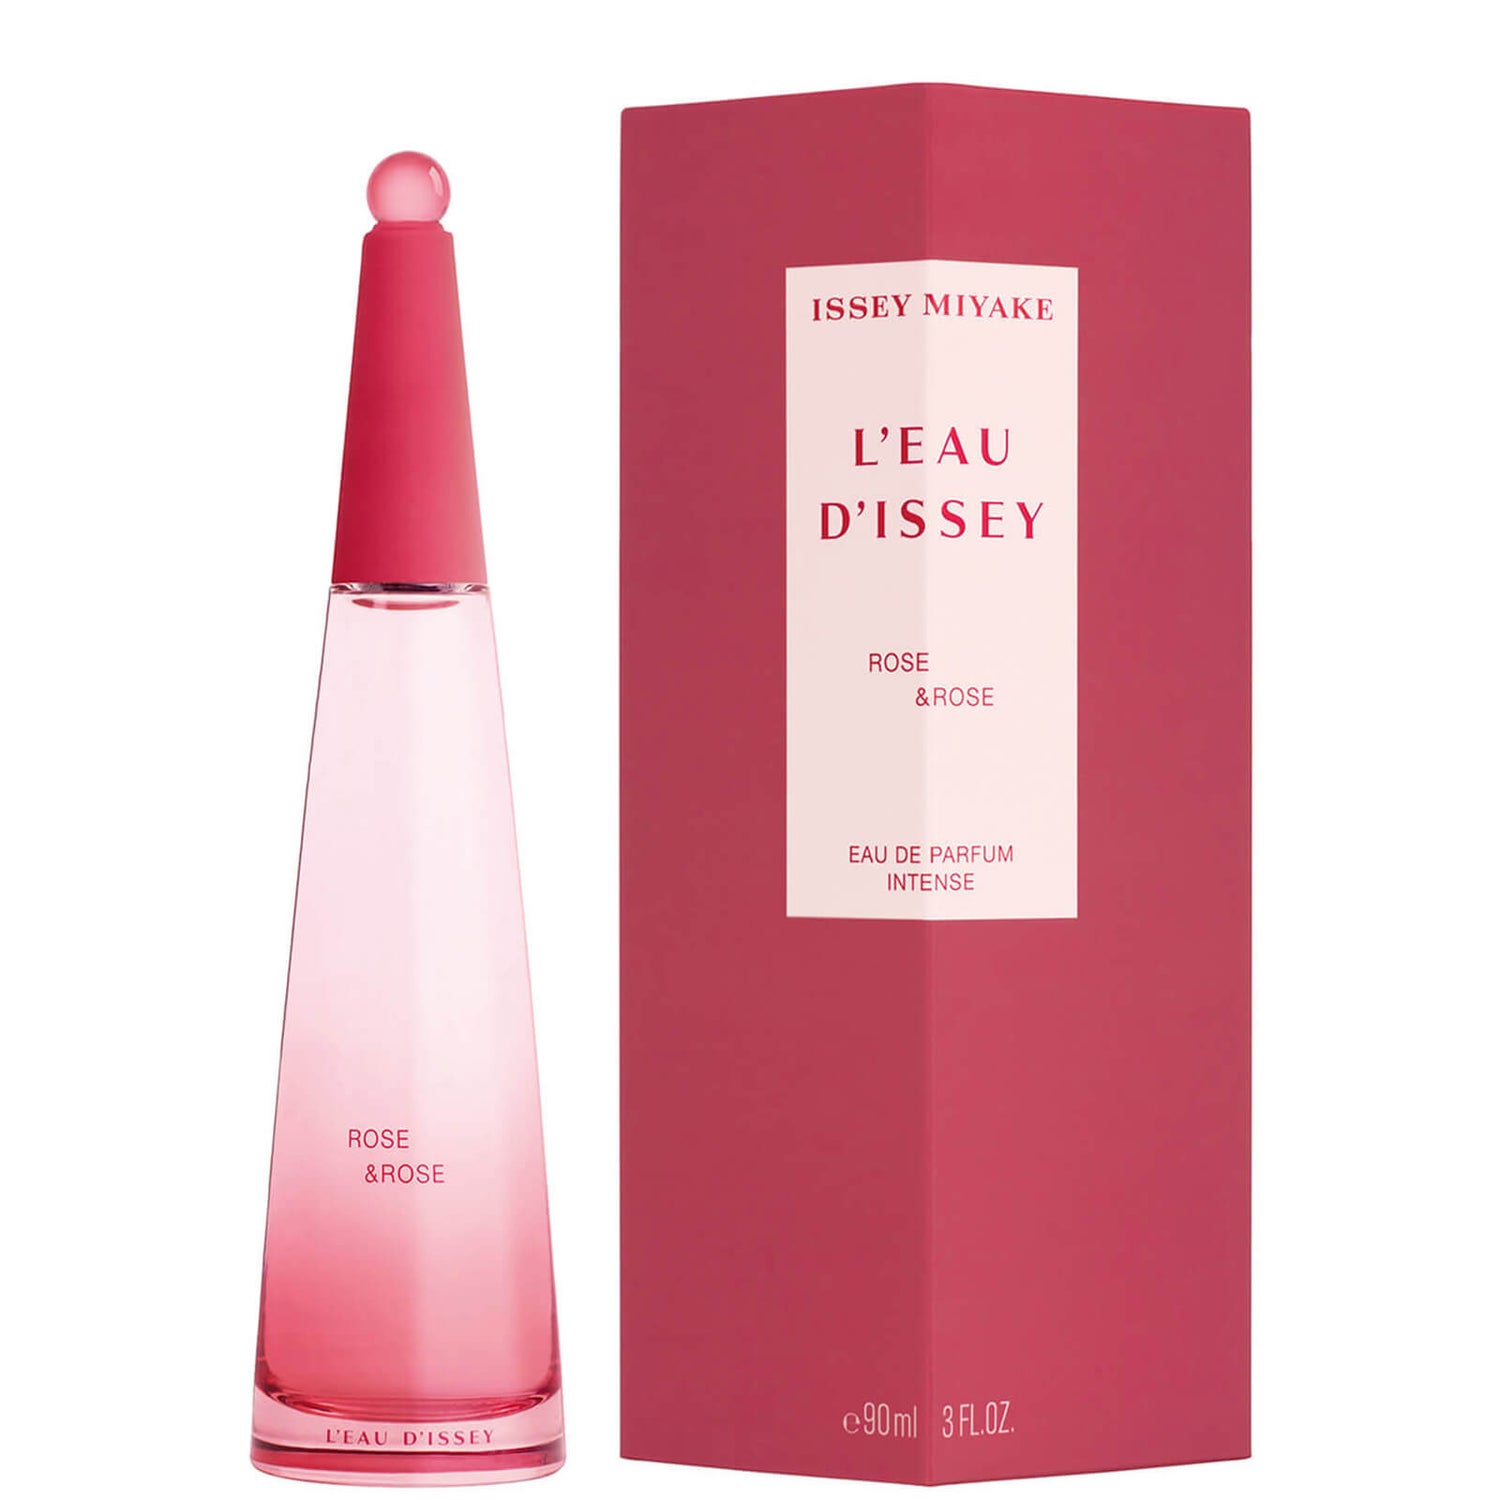 Issey Miyake L'eau D'Issey Rose & Rose Eau de Parfum Intense - 50 ml